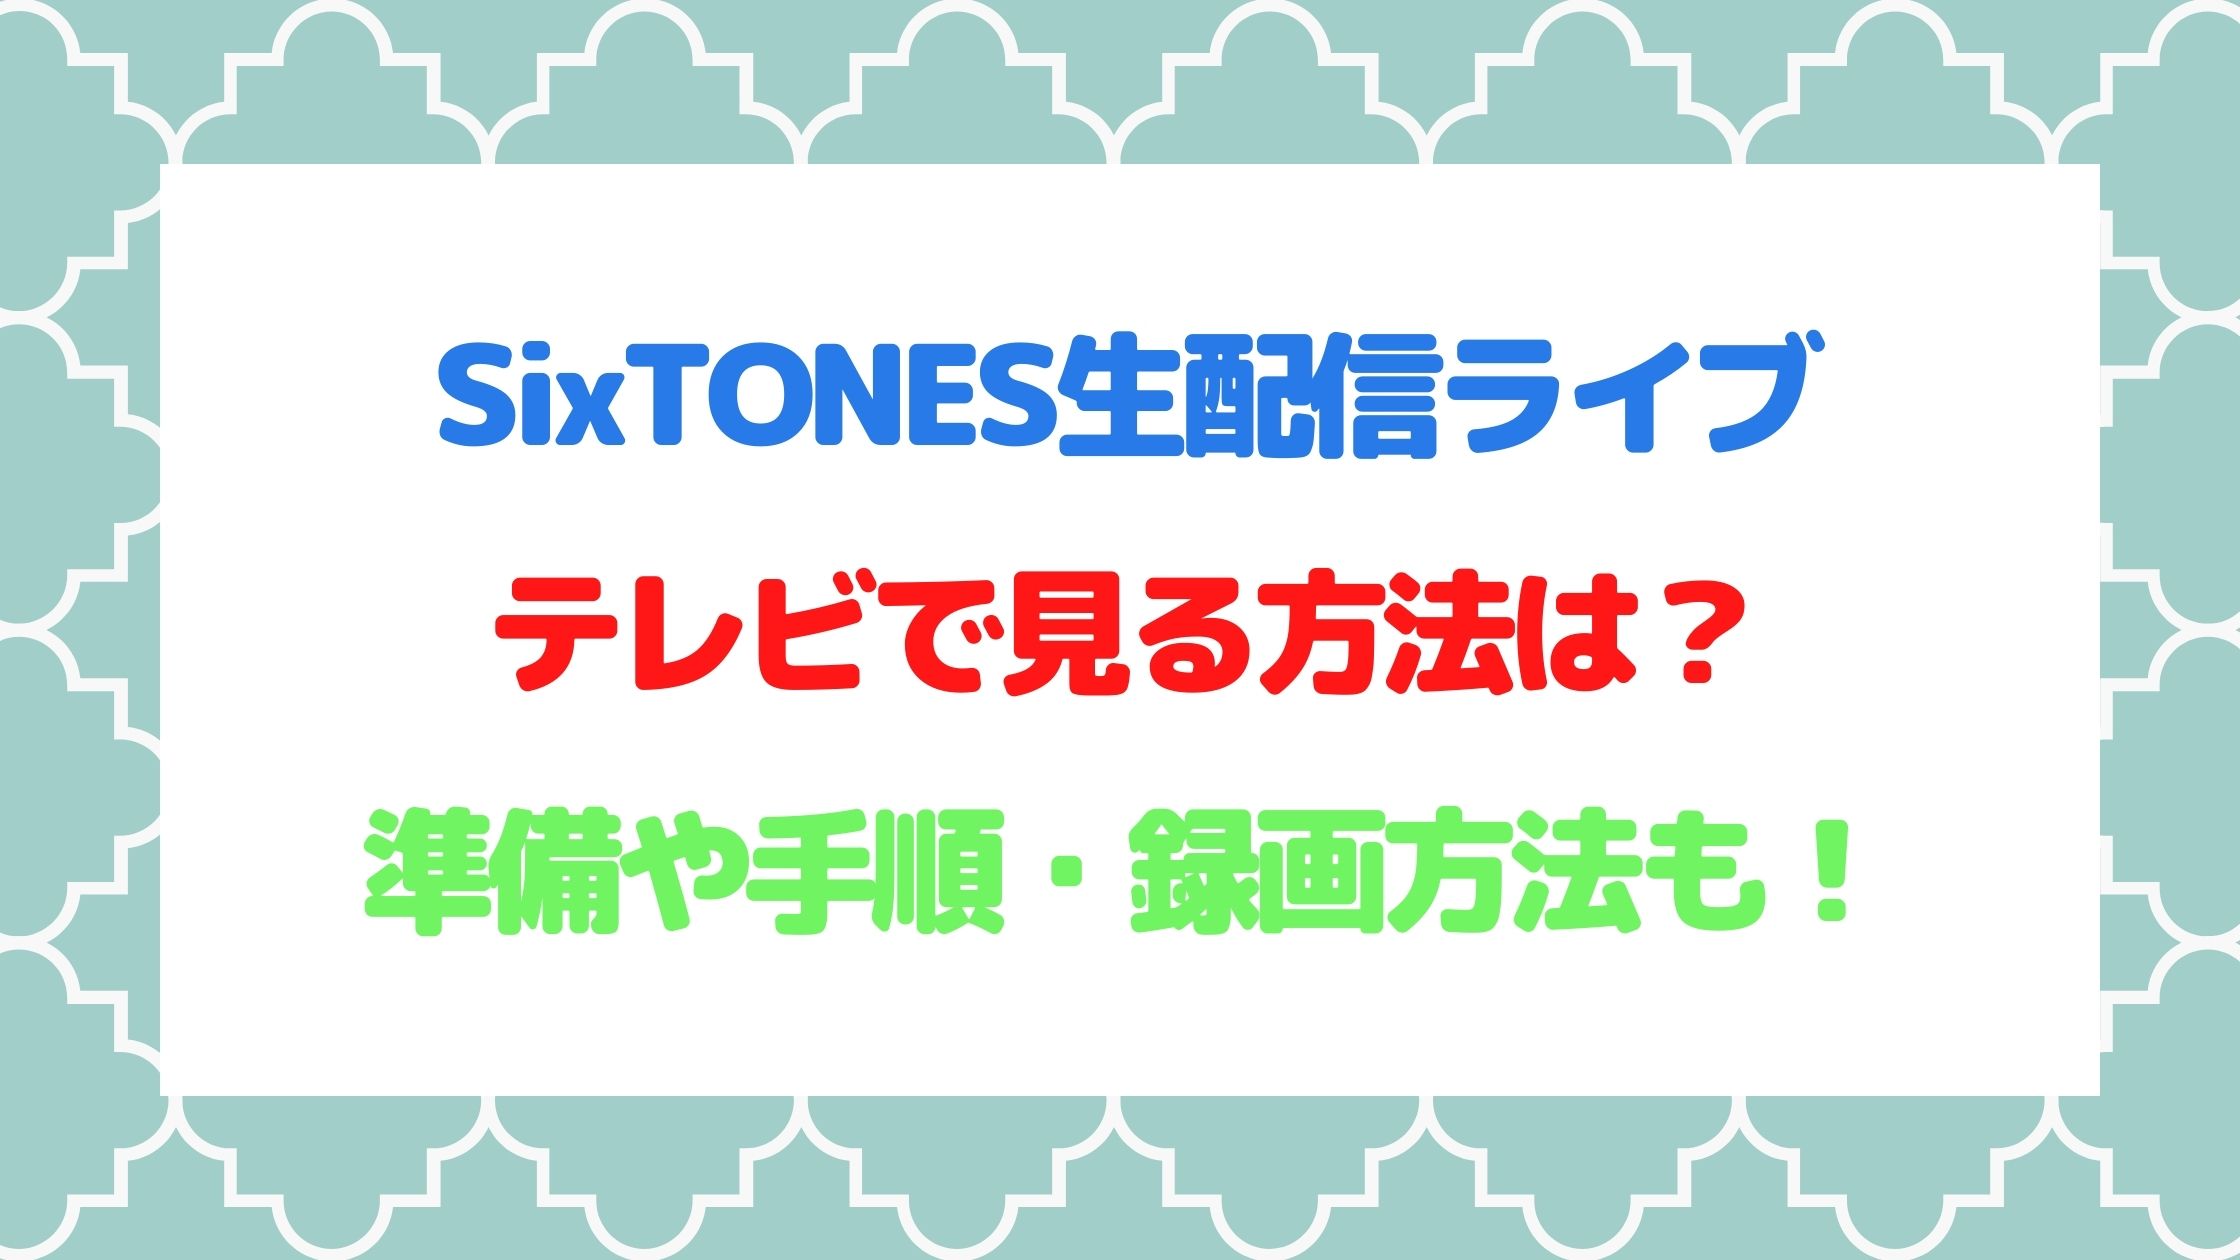 Sixtones ブログ 見方